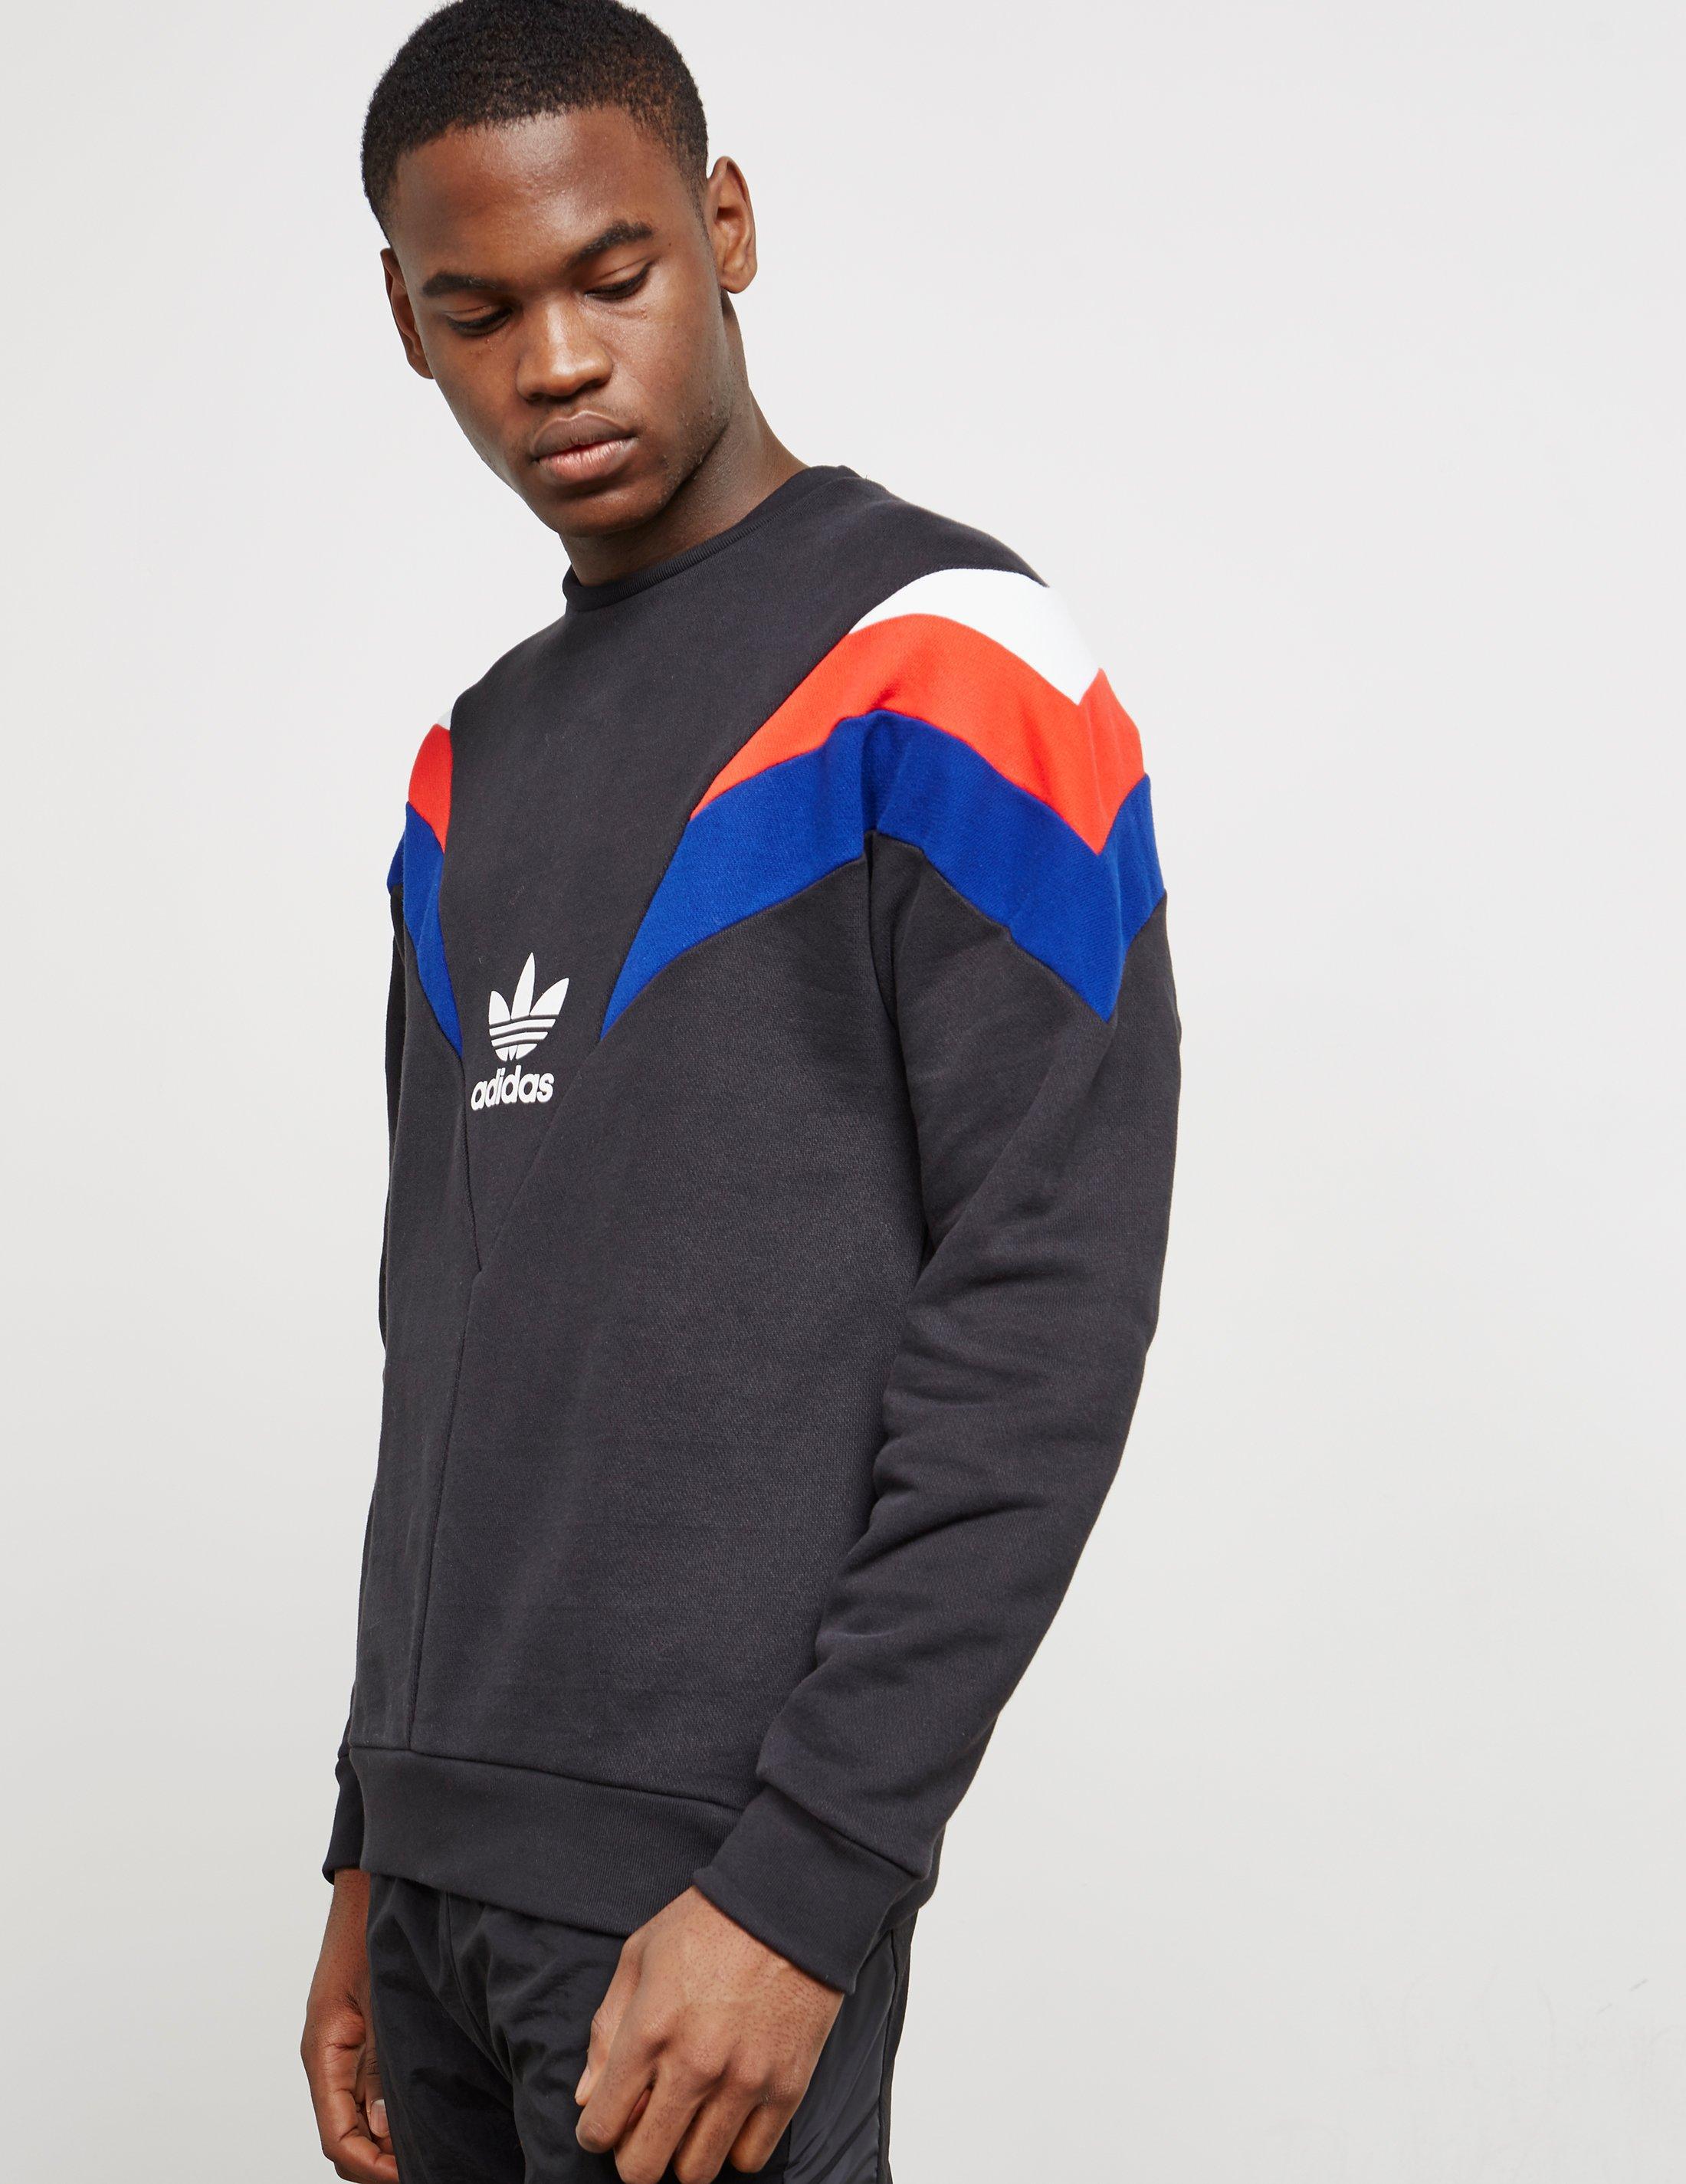 adidas Originals Cotton Mens Neva Crew Sweatshirt Black/red/blue for Men |  Lyst